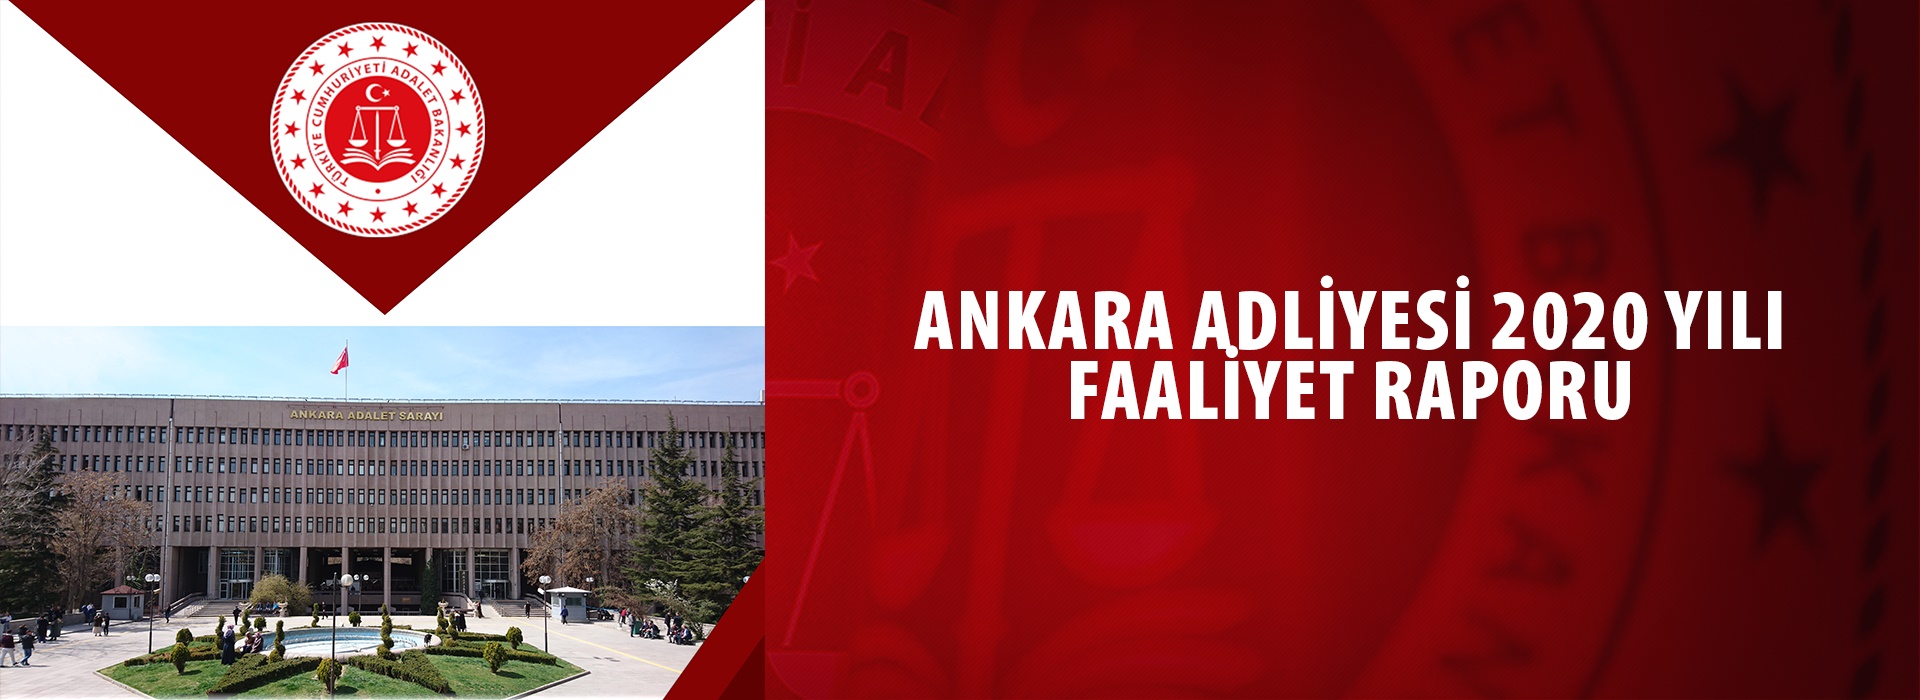 Ankara Adliyesi 2020 Yılı Faaliyet Raporu